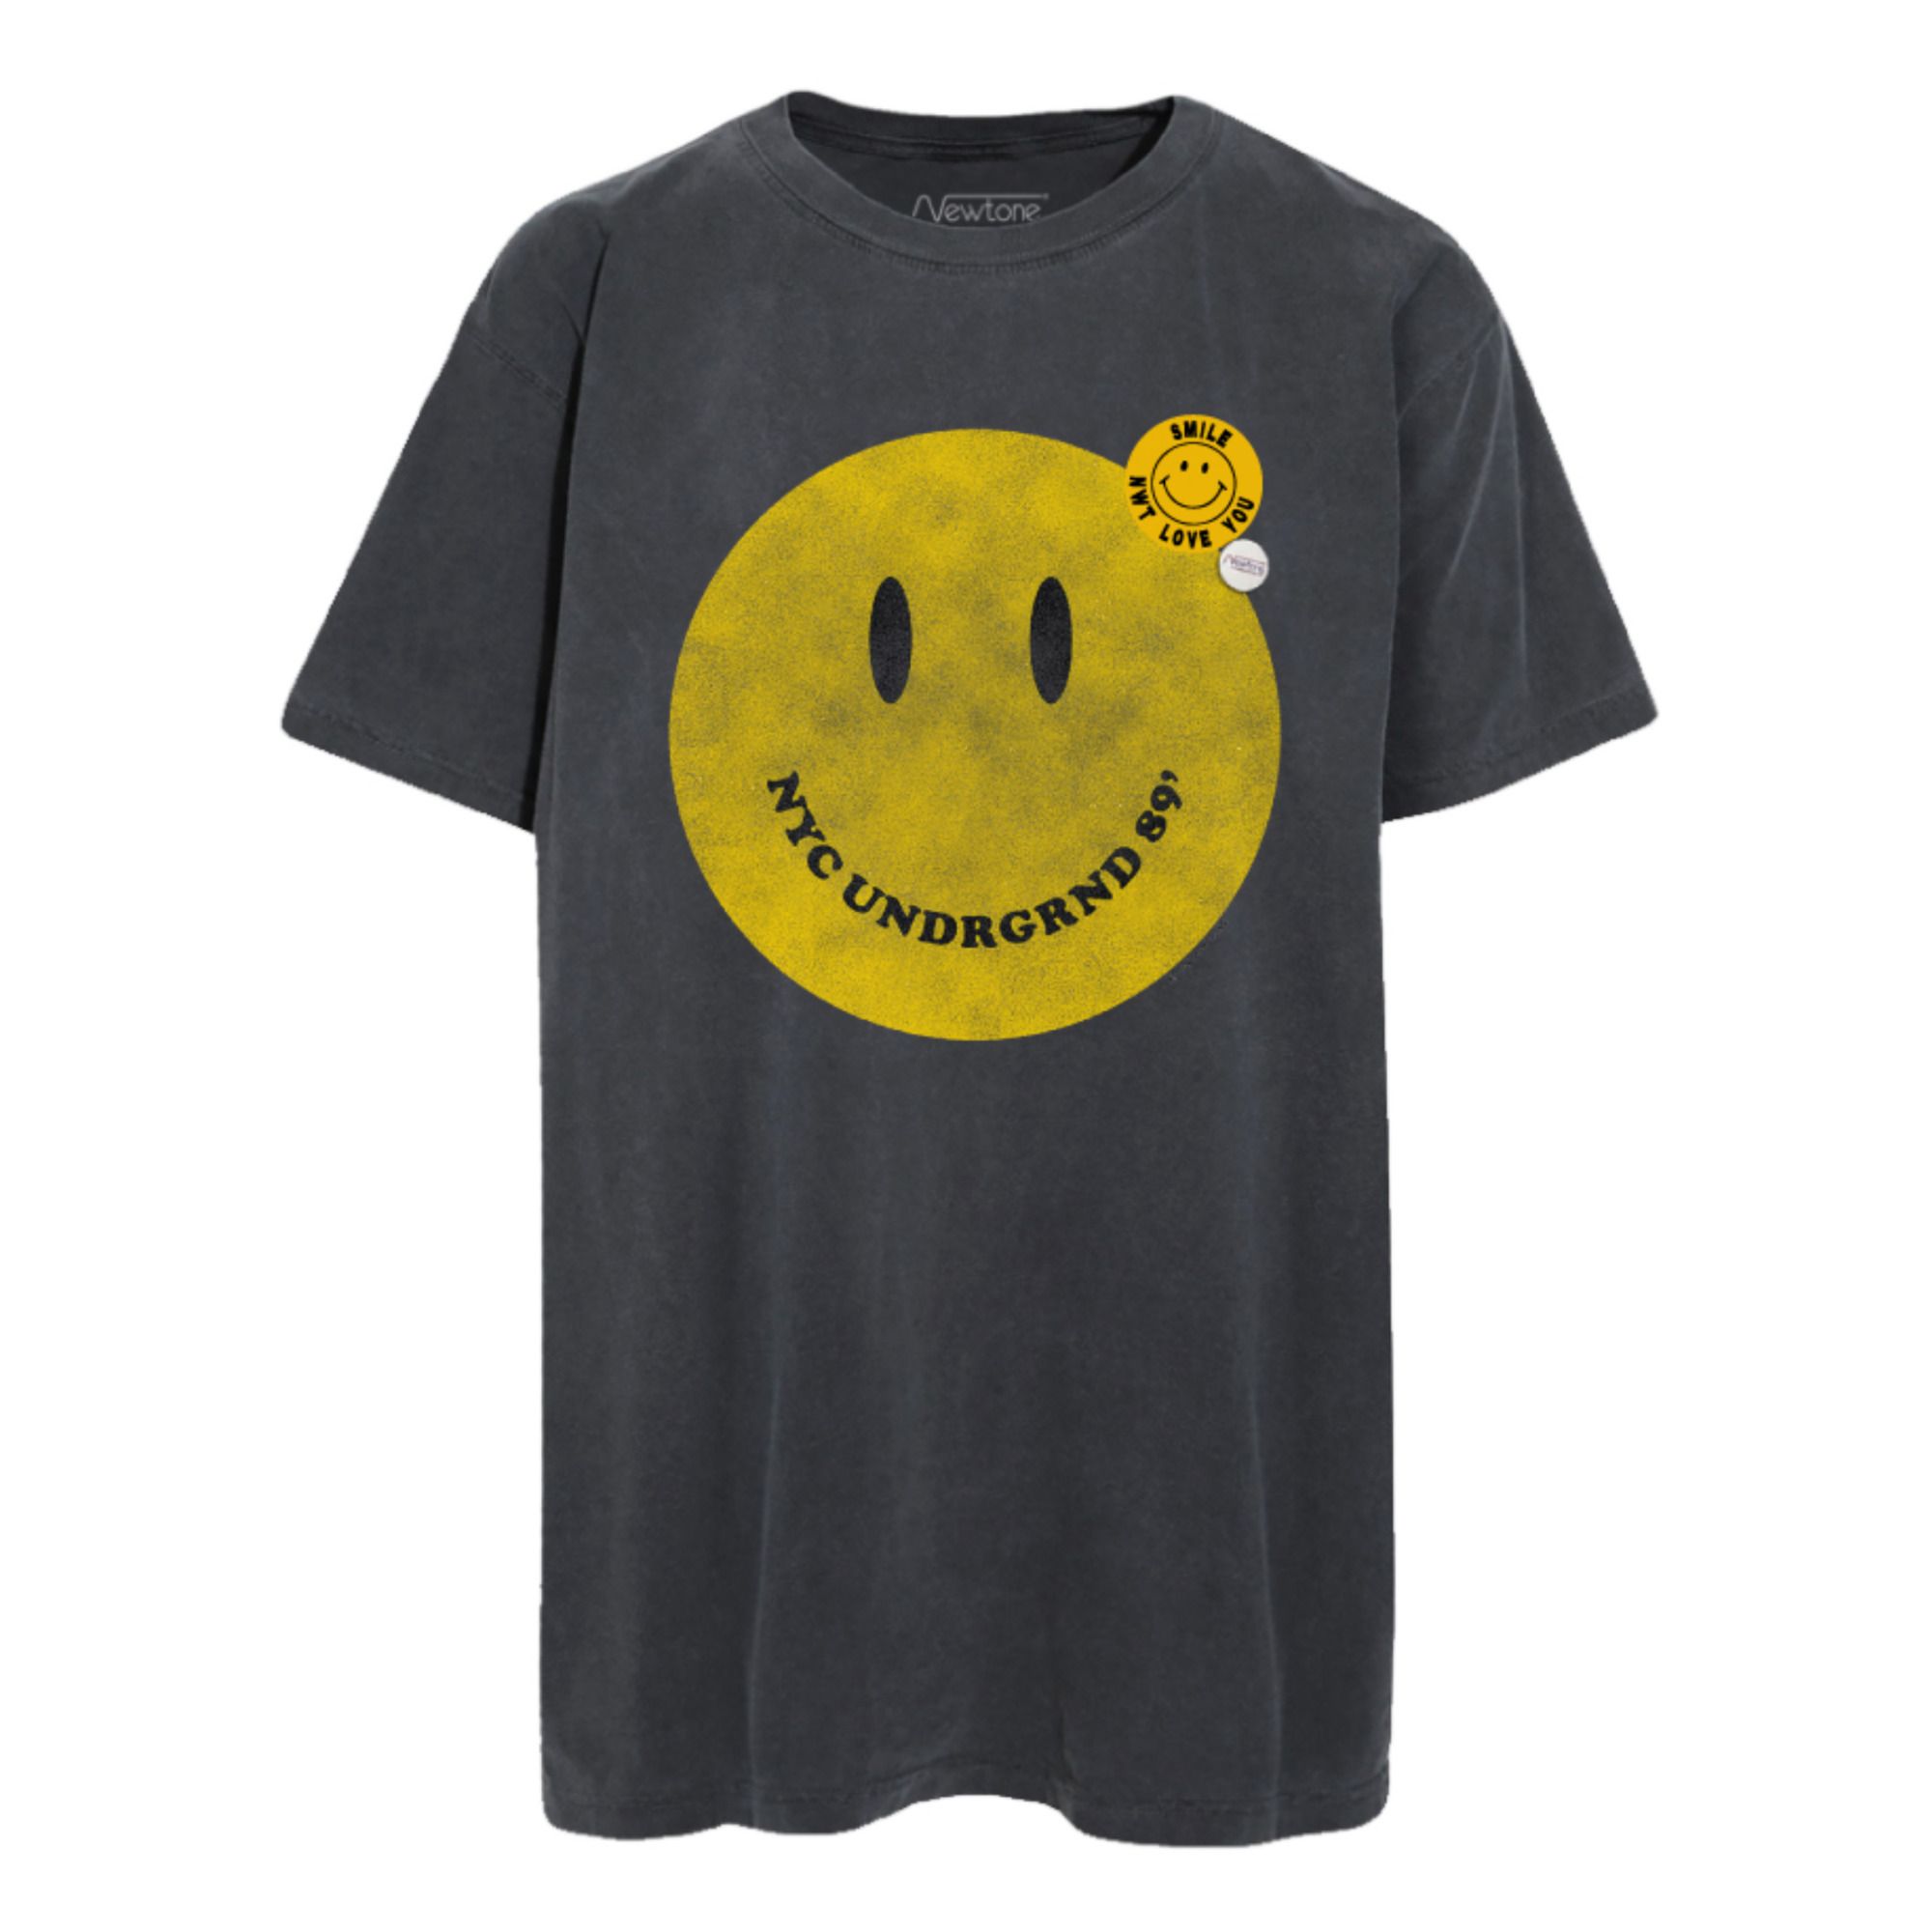 Newtone - T-Shirt Trucker Smiley - Femme - Gris anthracite